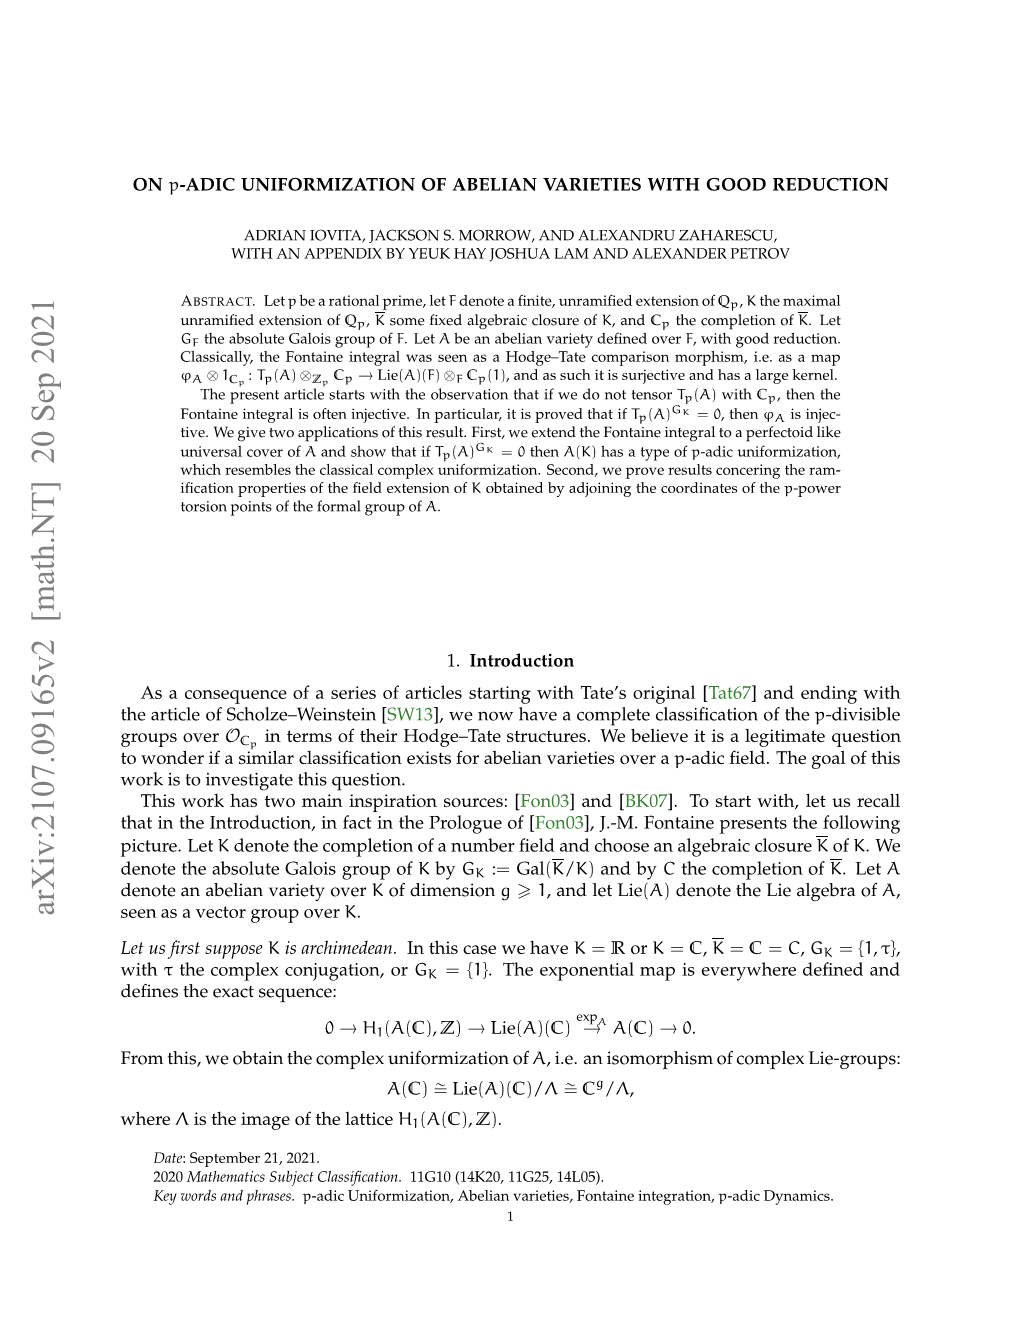 Towards a $ P $-Adic Uniformization of Abelian Varieties with Good Reduction